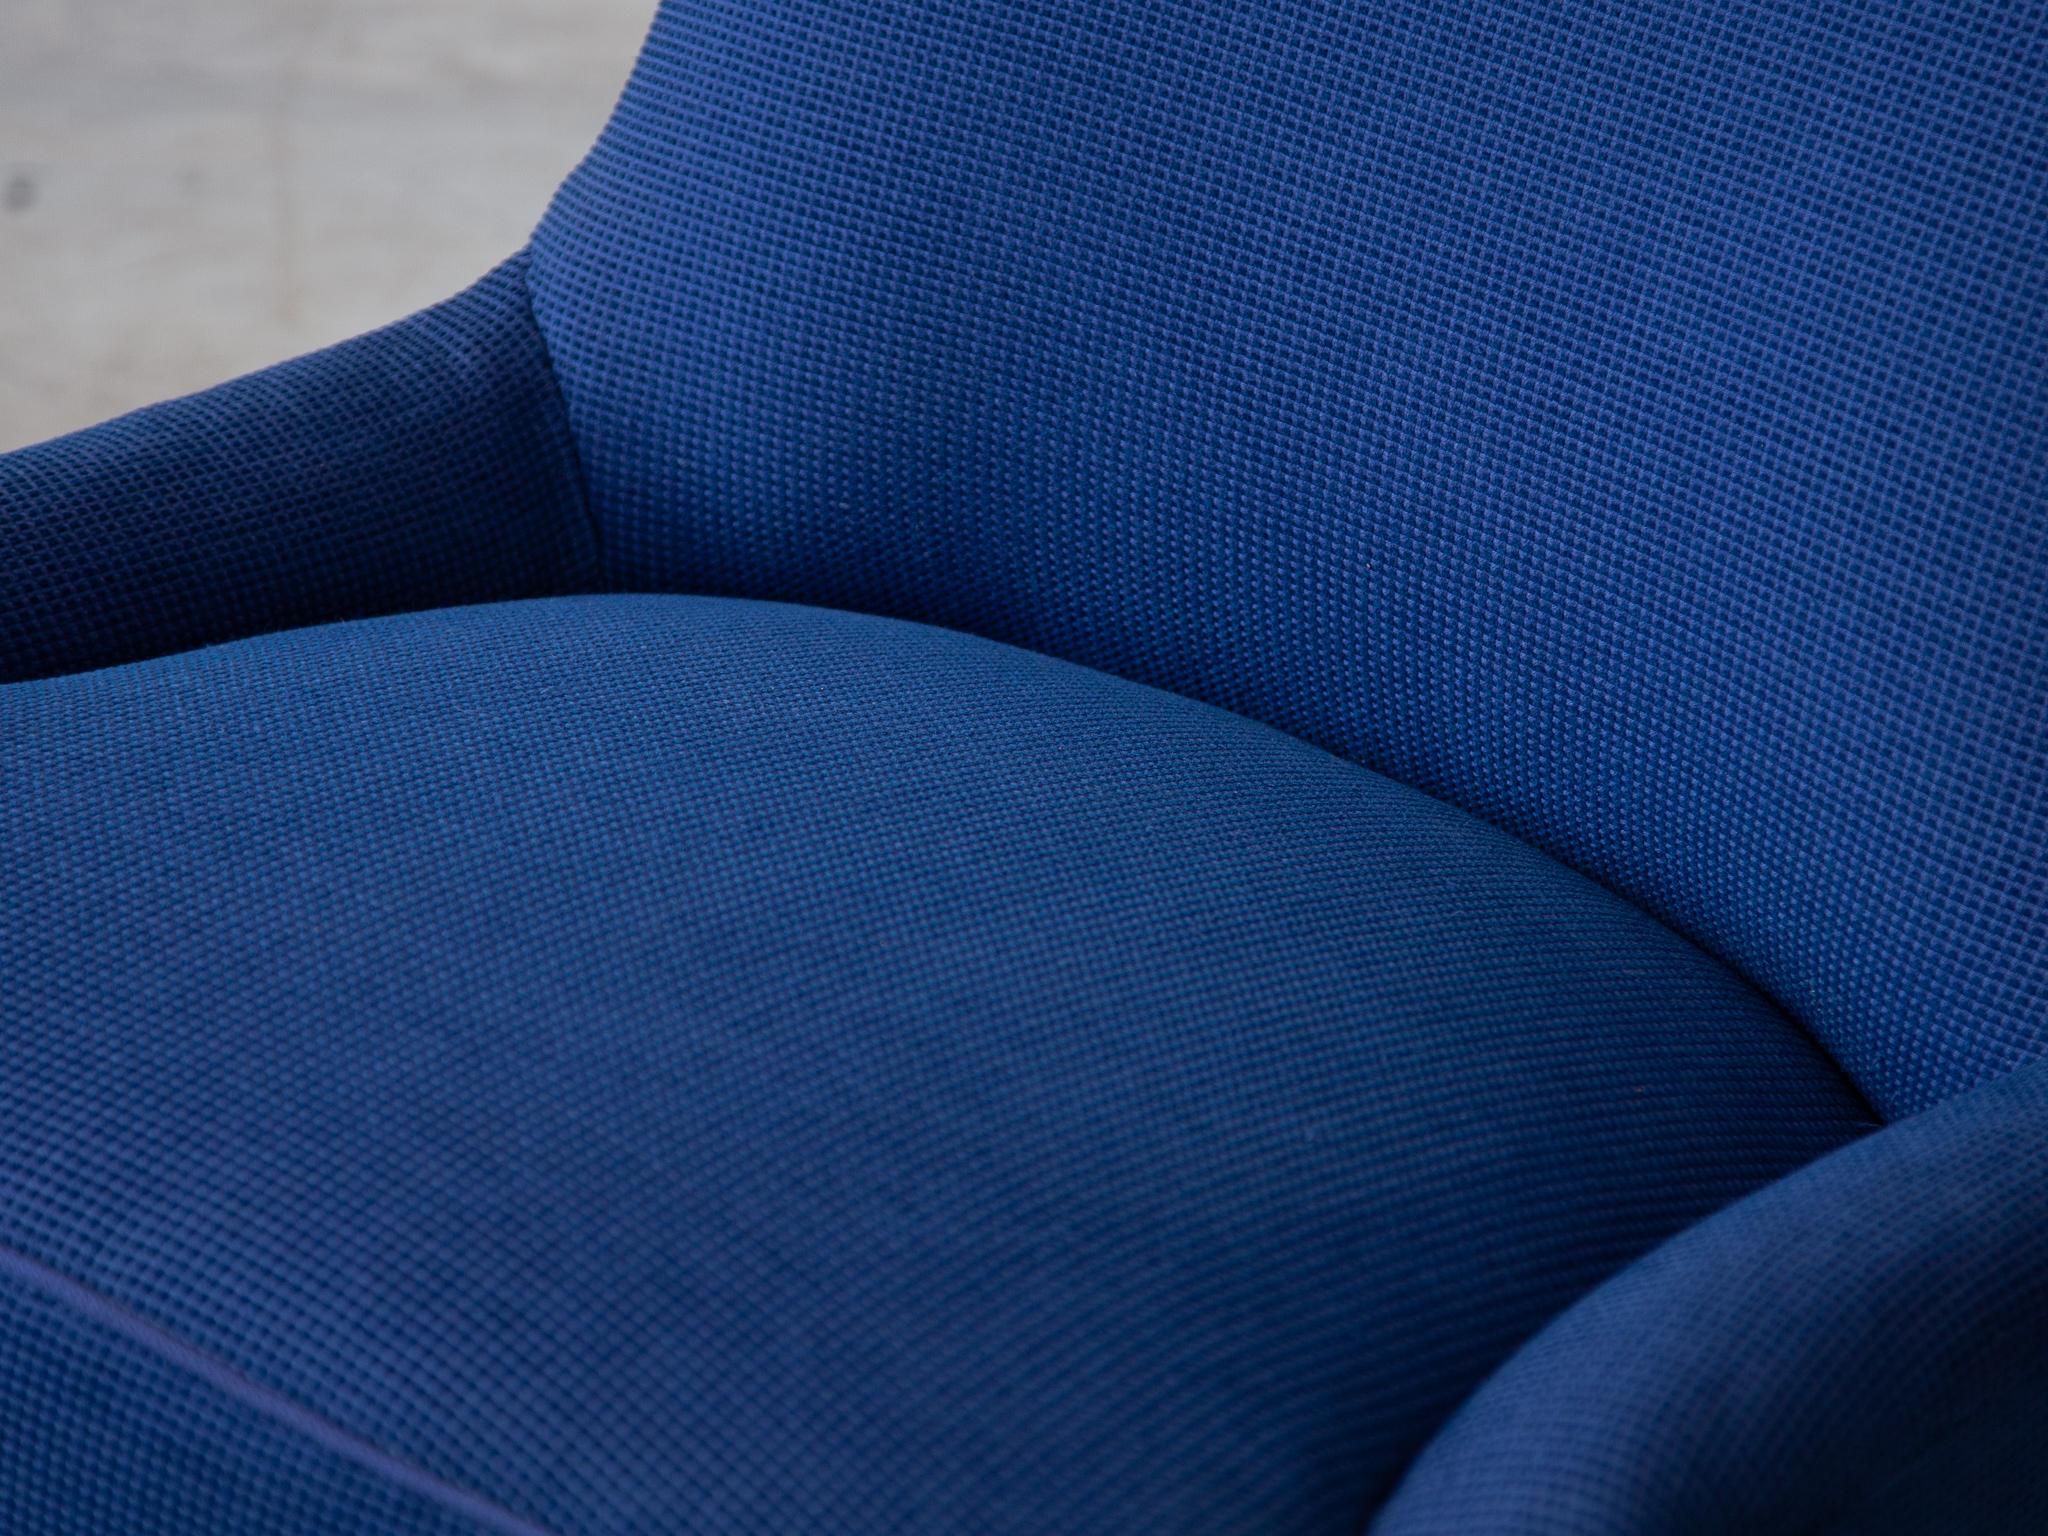 Midcentury Modern 1950s Blue Fabric, Lounge Arm Chair, Scandinavian Design For Sale 2